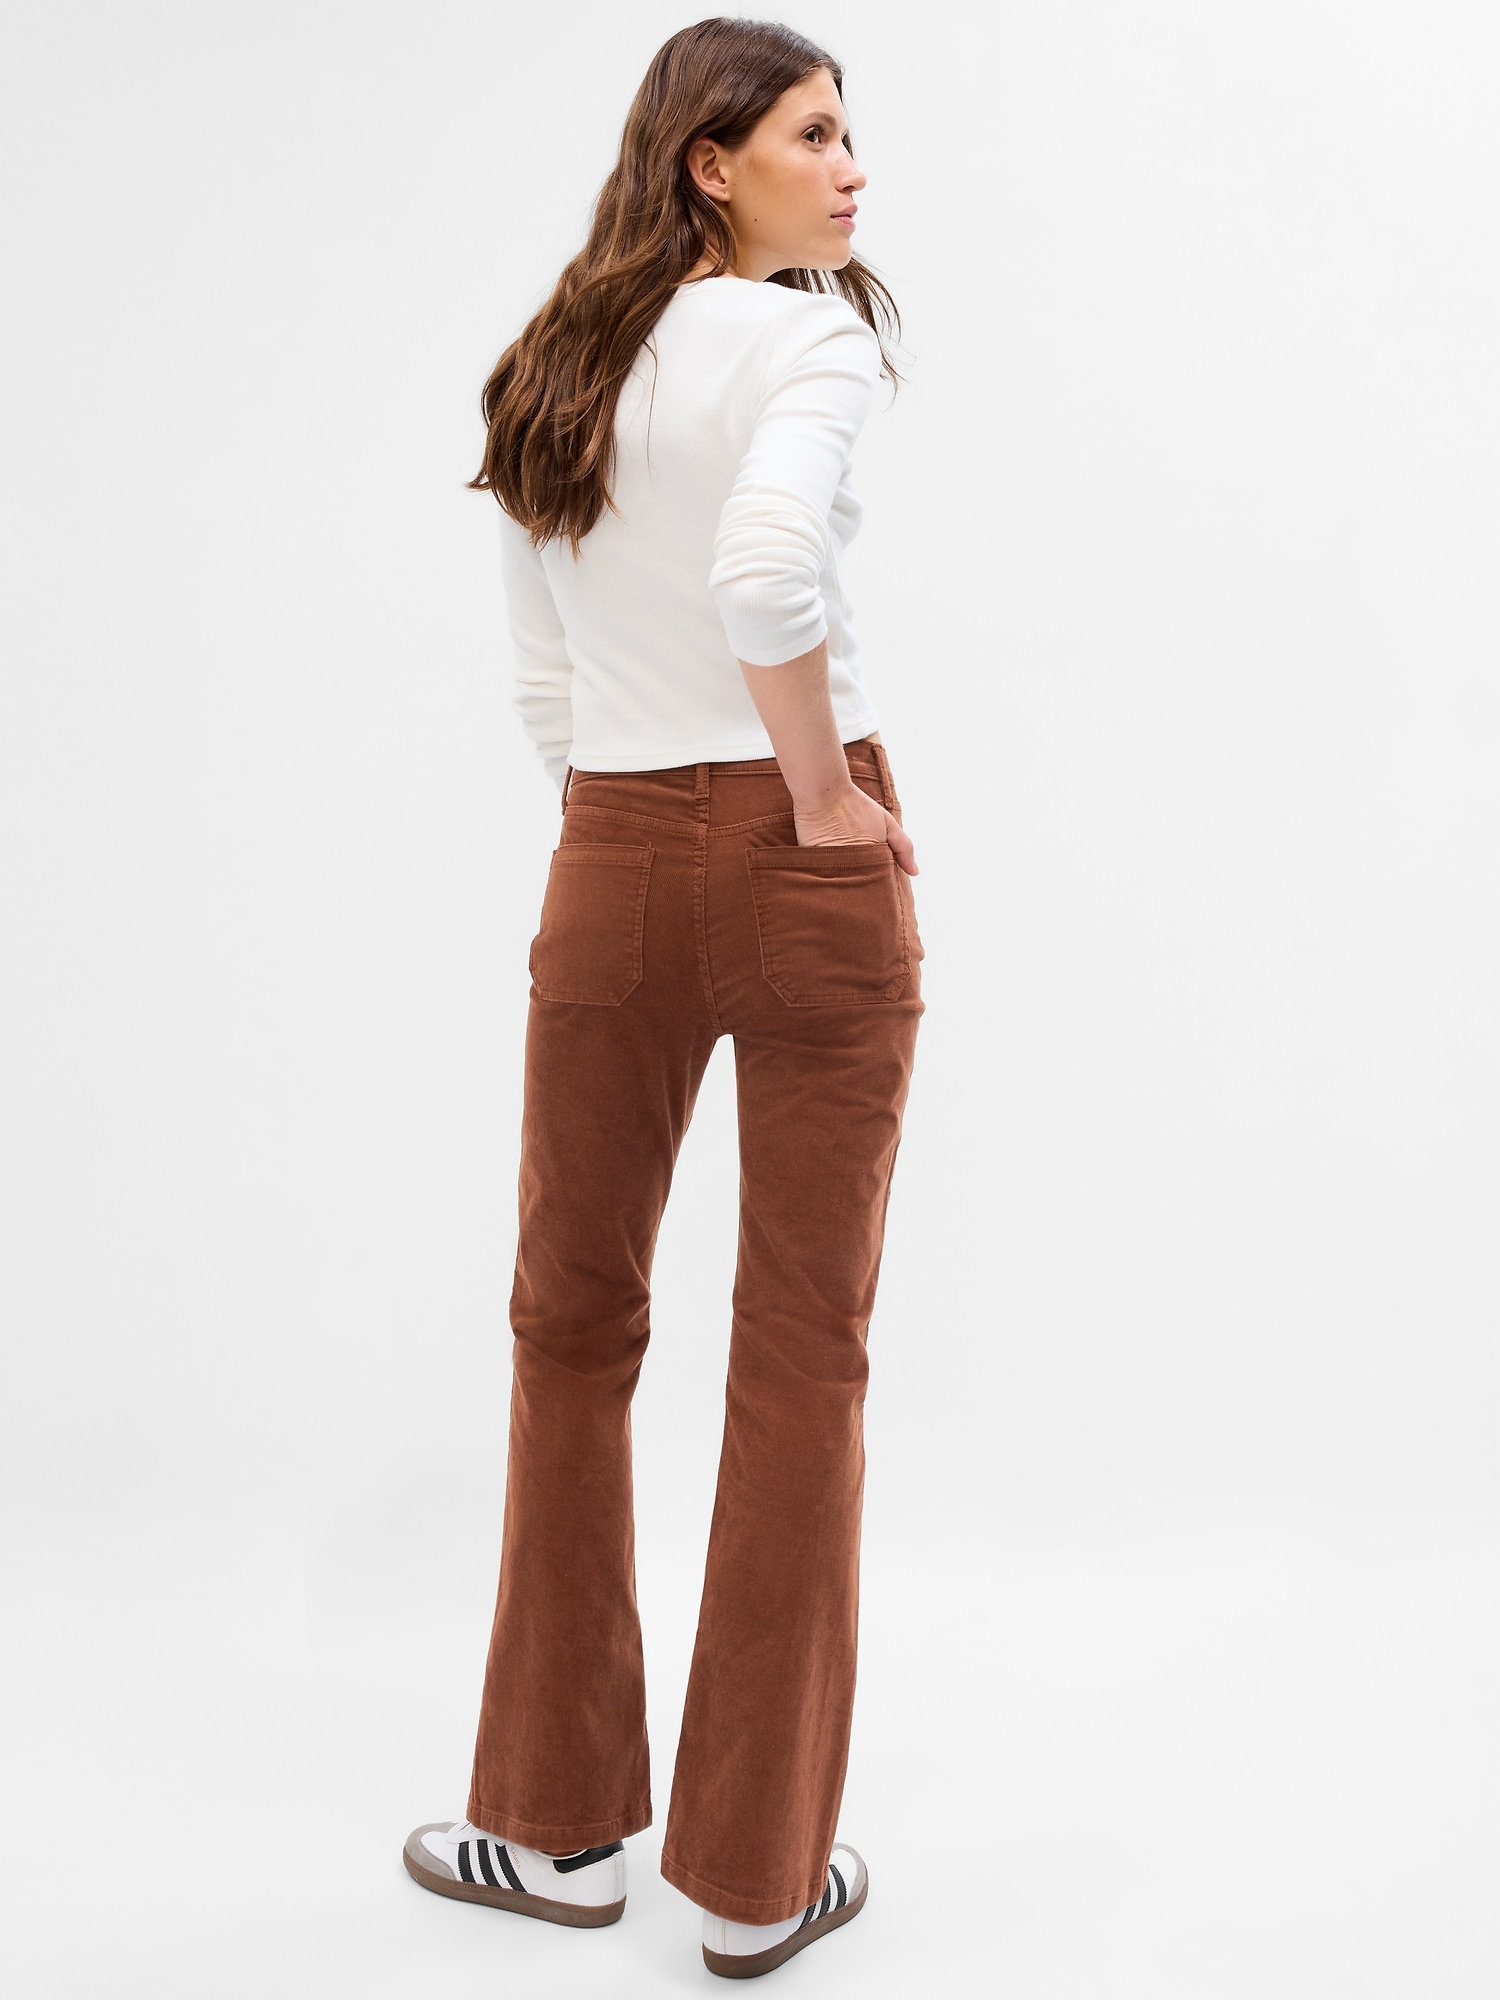 Flare Work Pantswomen's Corduroy Flare Pants - High Waist Slim Fit Autumn  Office Trousers